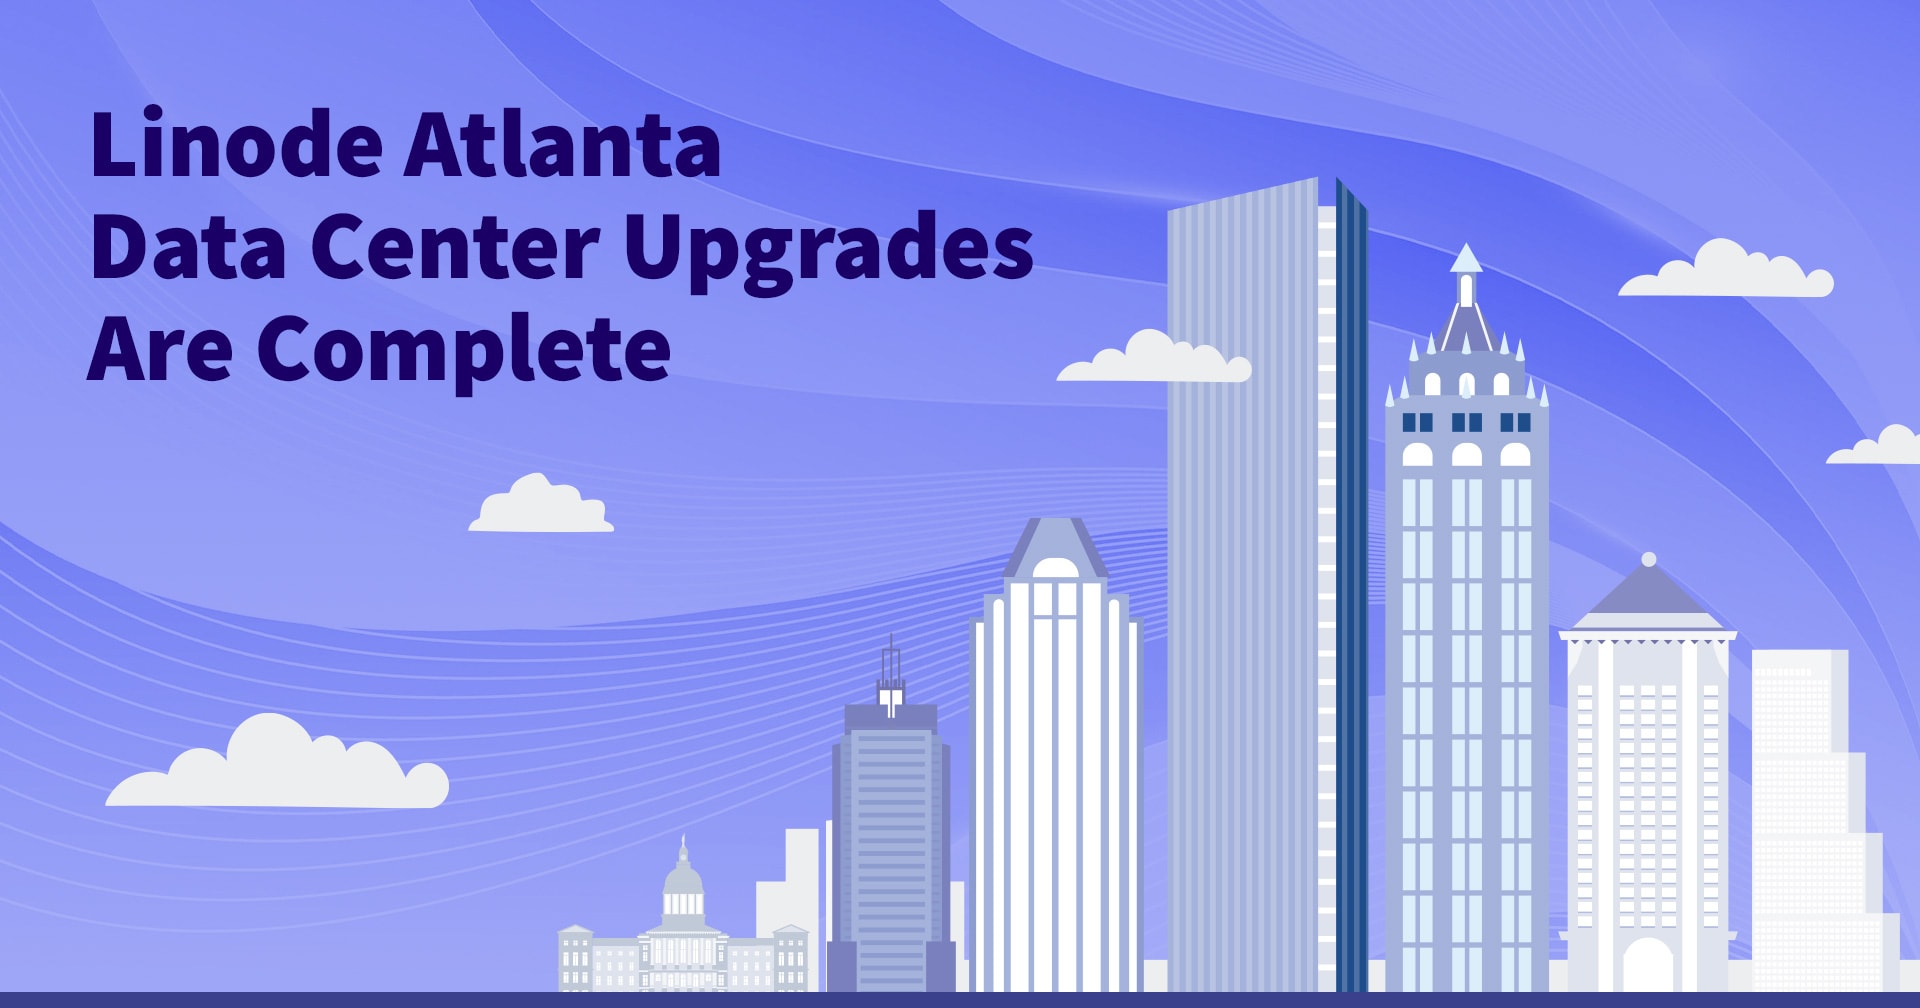 Linode-Atlanta-Data-Centro de Dados-Upgrades-Are-Complete-1